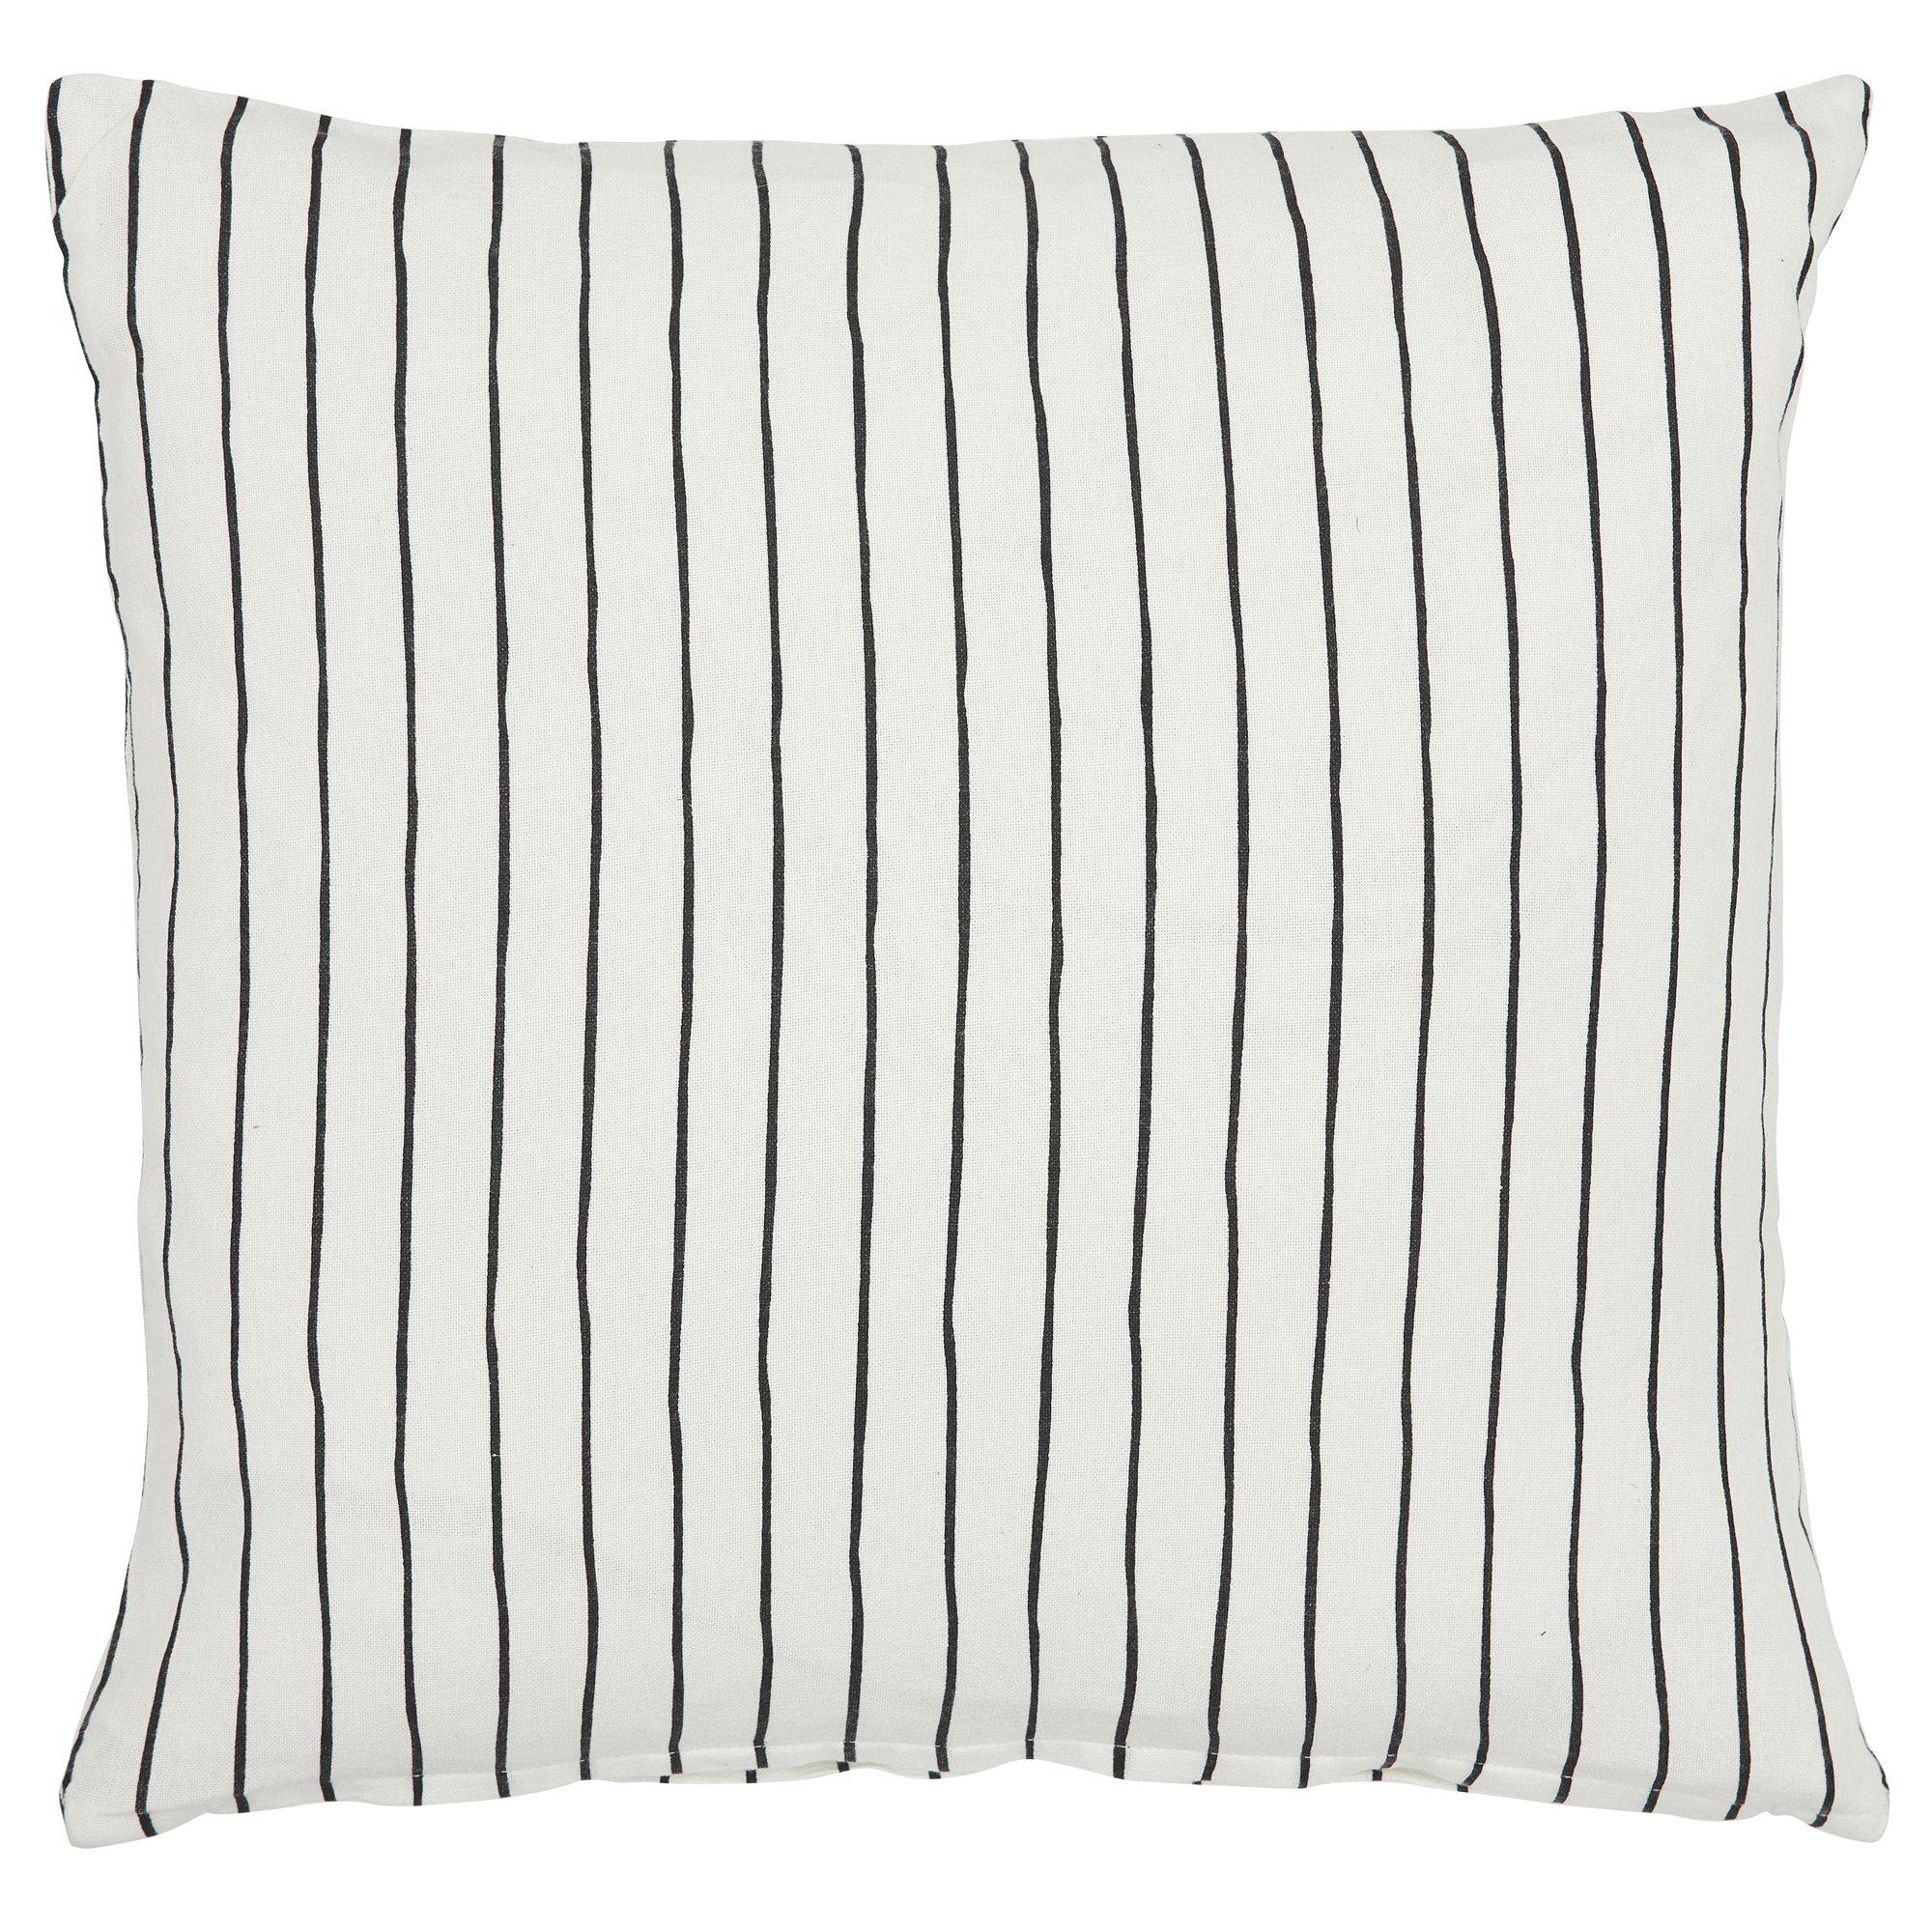 Stripe Cushion Black and White